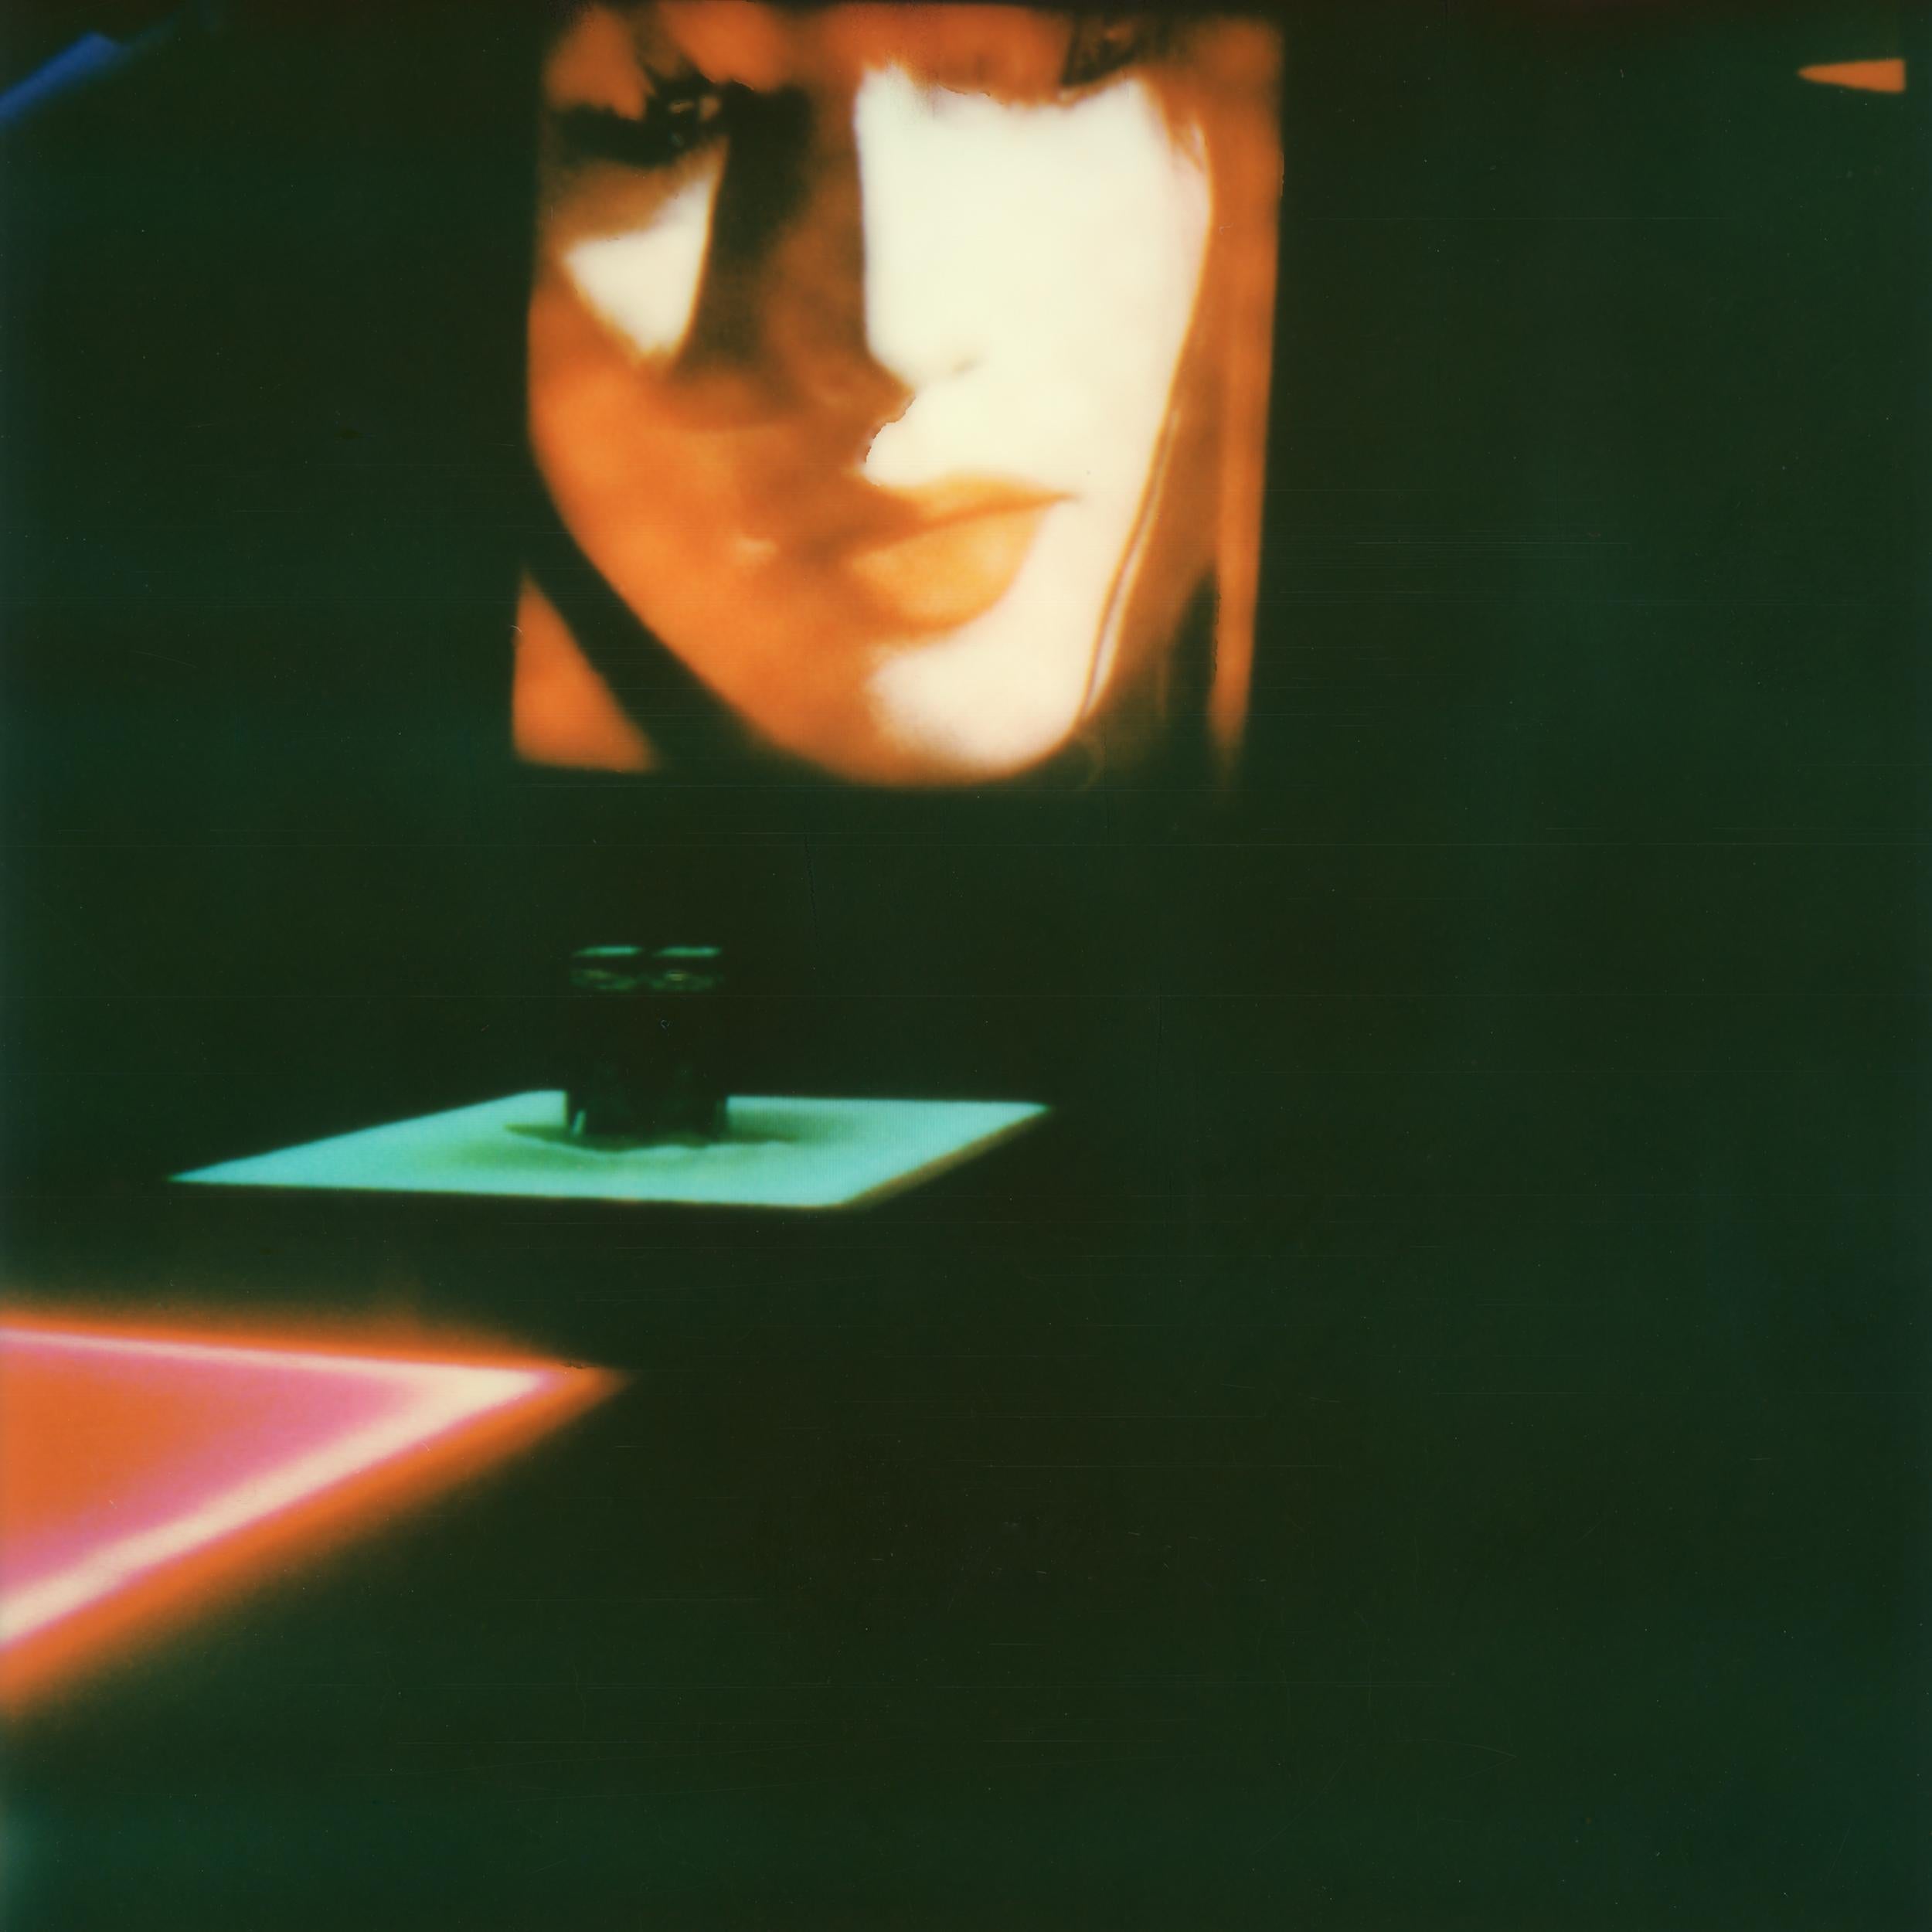 Clare Marie Bailey Color Photograph - Neon Demon - Contemporary, Polaroid, Woman, 21st Century, Psychiatry